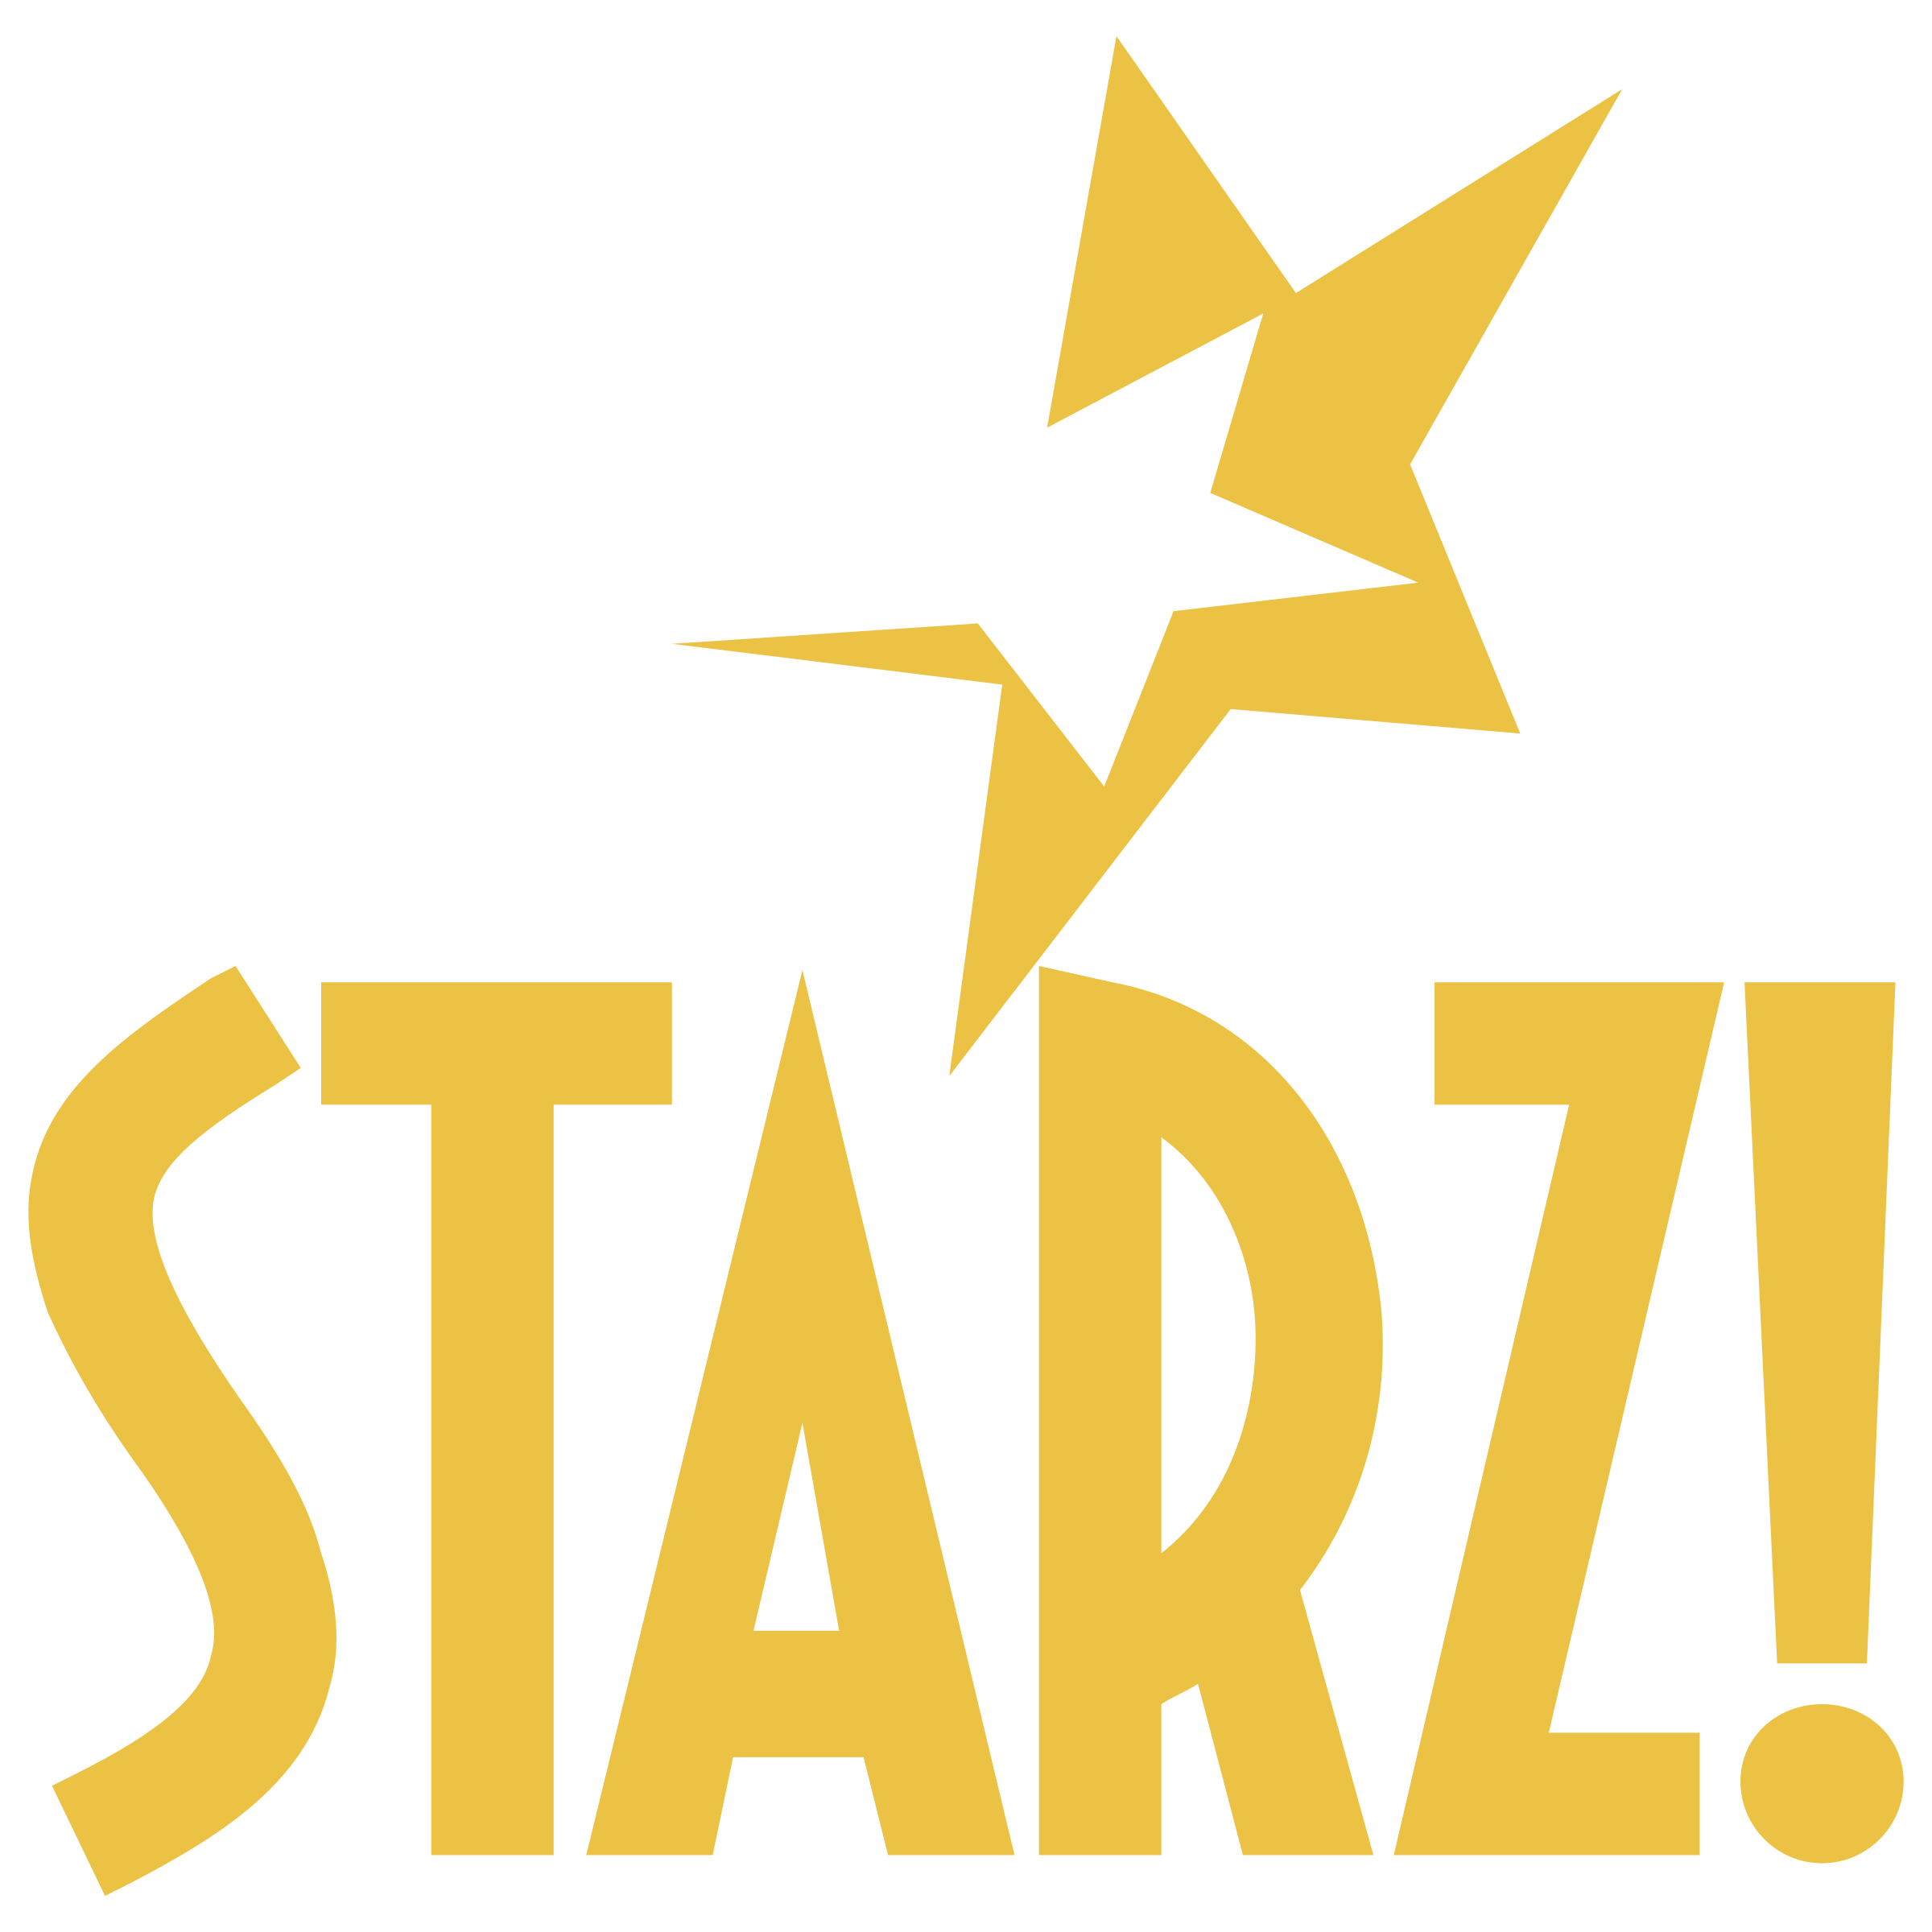 Starz Logo - Starz! Logo PNG Transparent & SVG Vector - Freebie Supply